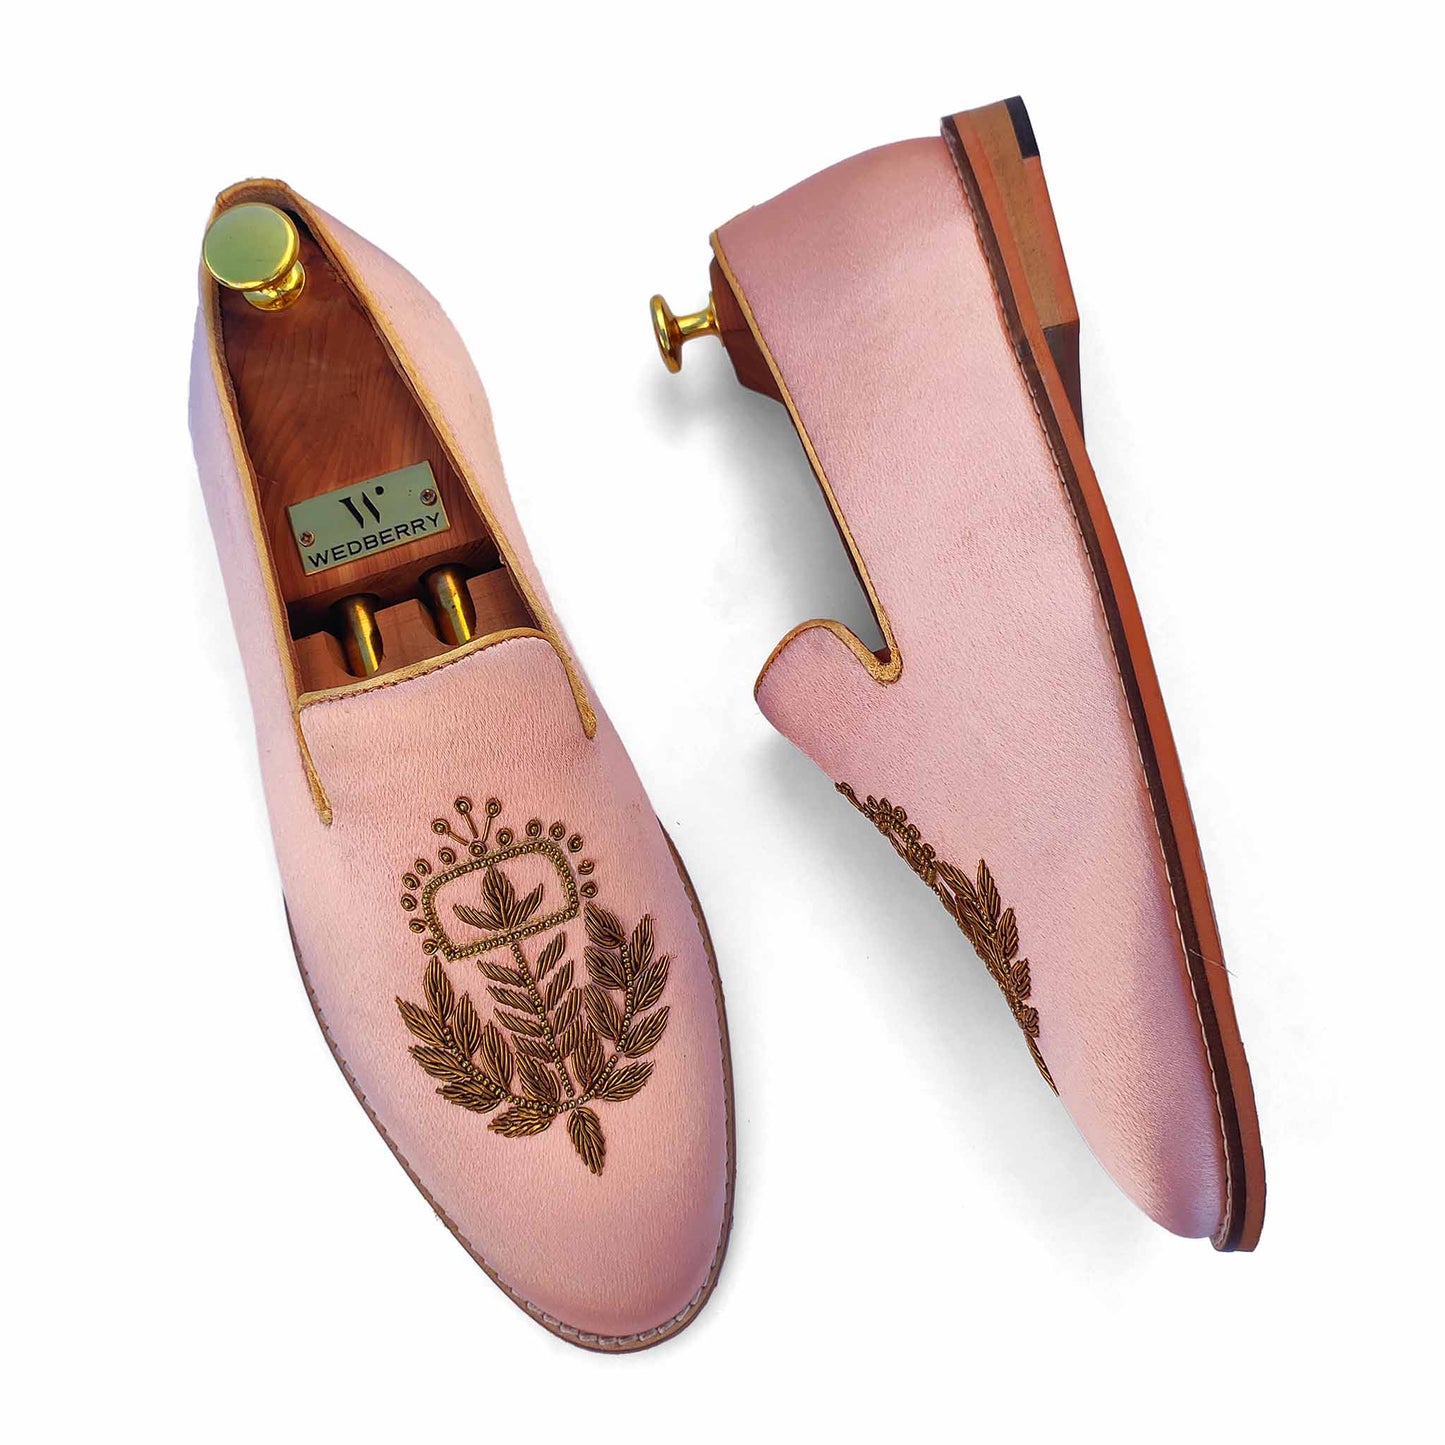 Light Pink Satin Silk with Golden Zardozi Handwork Wedding Shoes Ethnic Loafers for Men